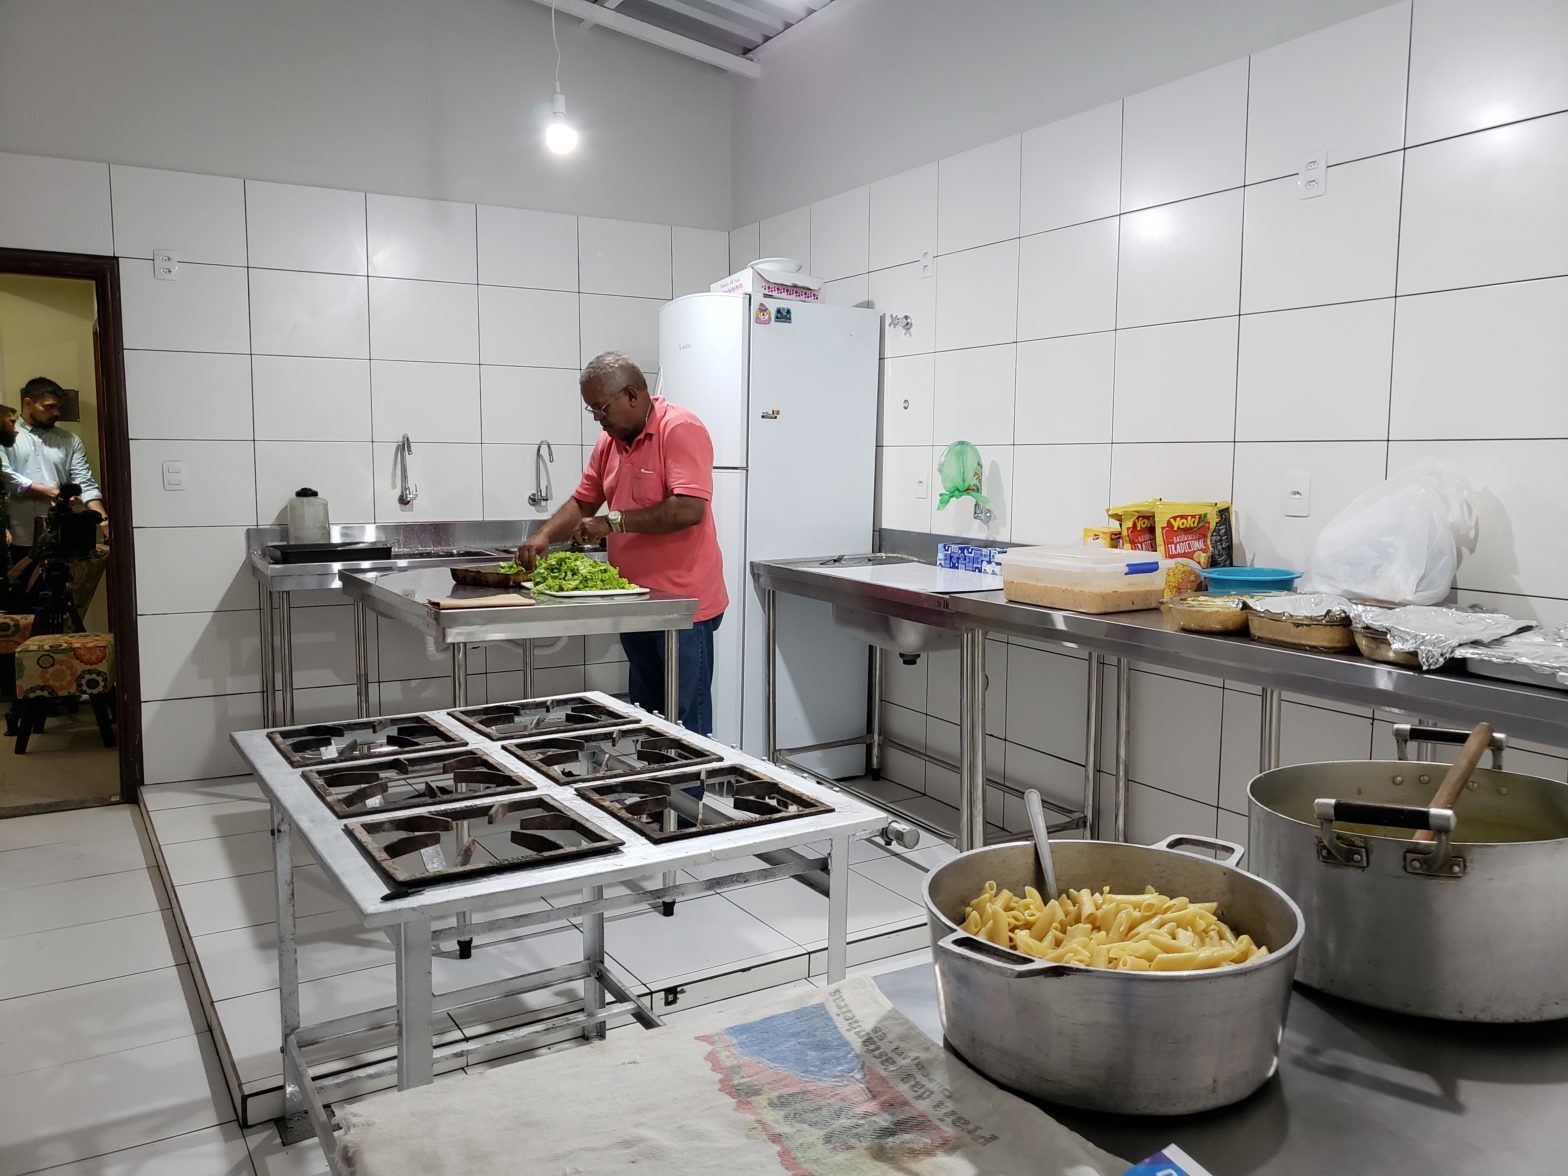 Instituto Lar inaugura nova cozinha com apoio do sindicato, SISEJUFE